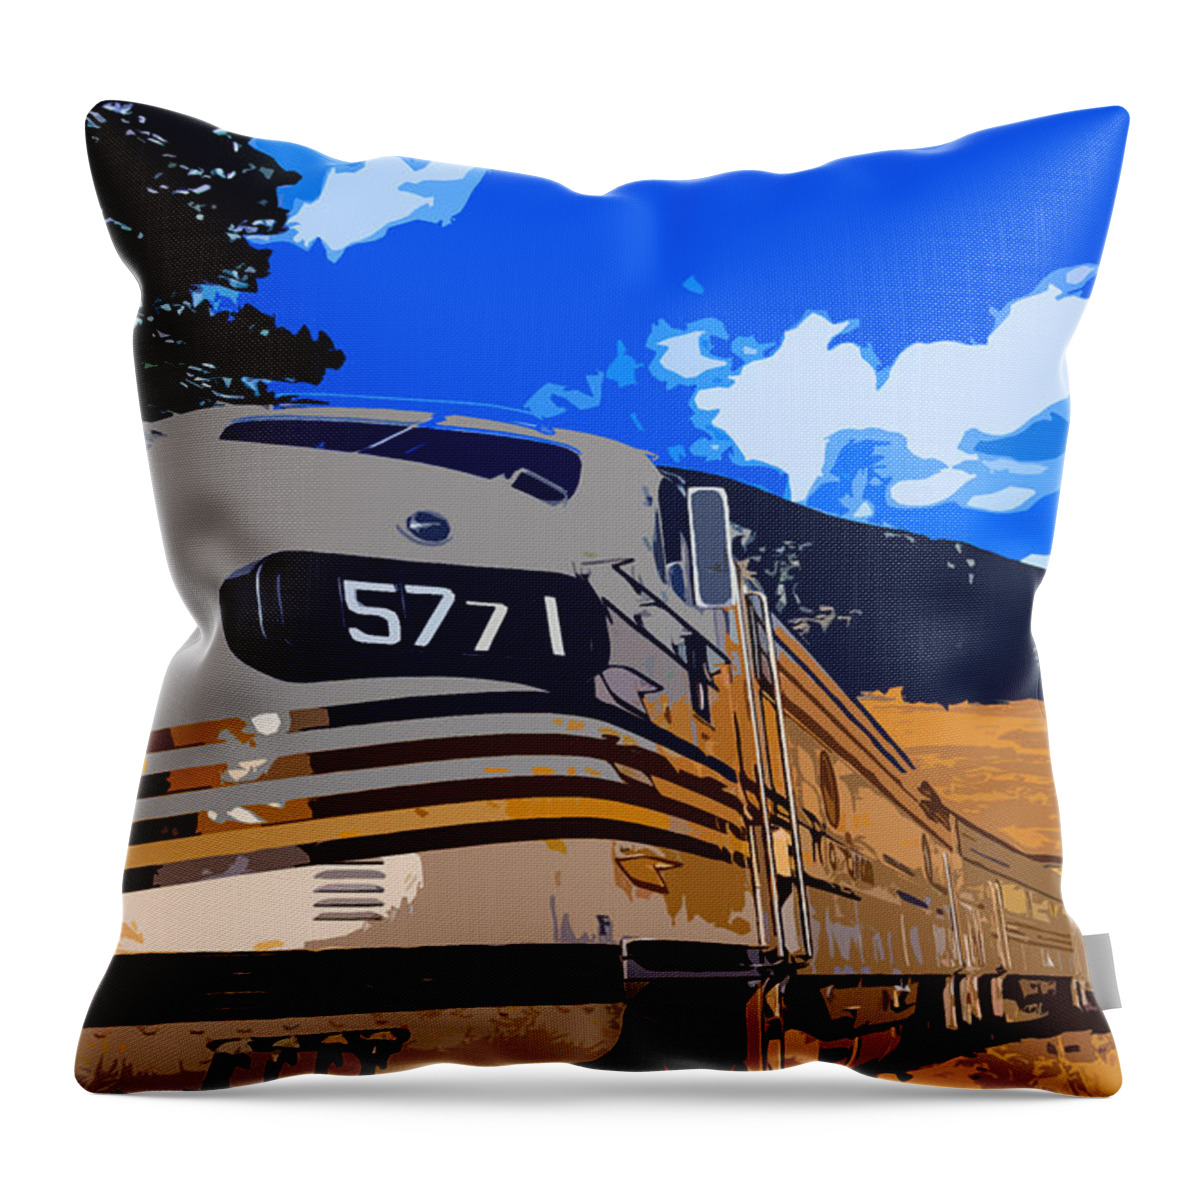 Train Throw Pillow featuring the mixed media Rio 5771 by Shannon Harrington